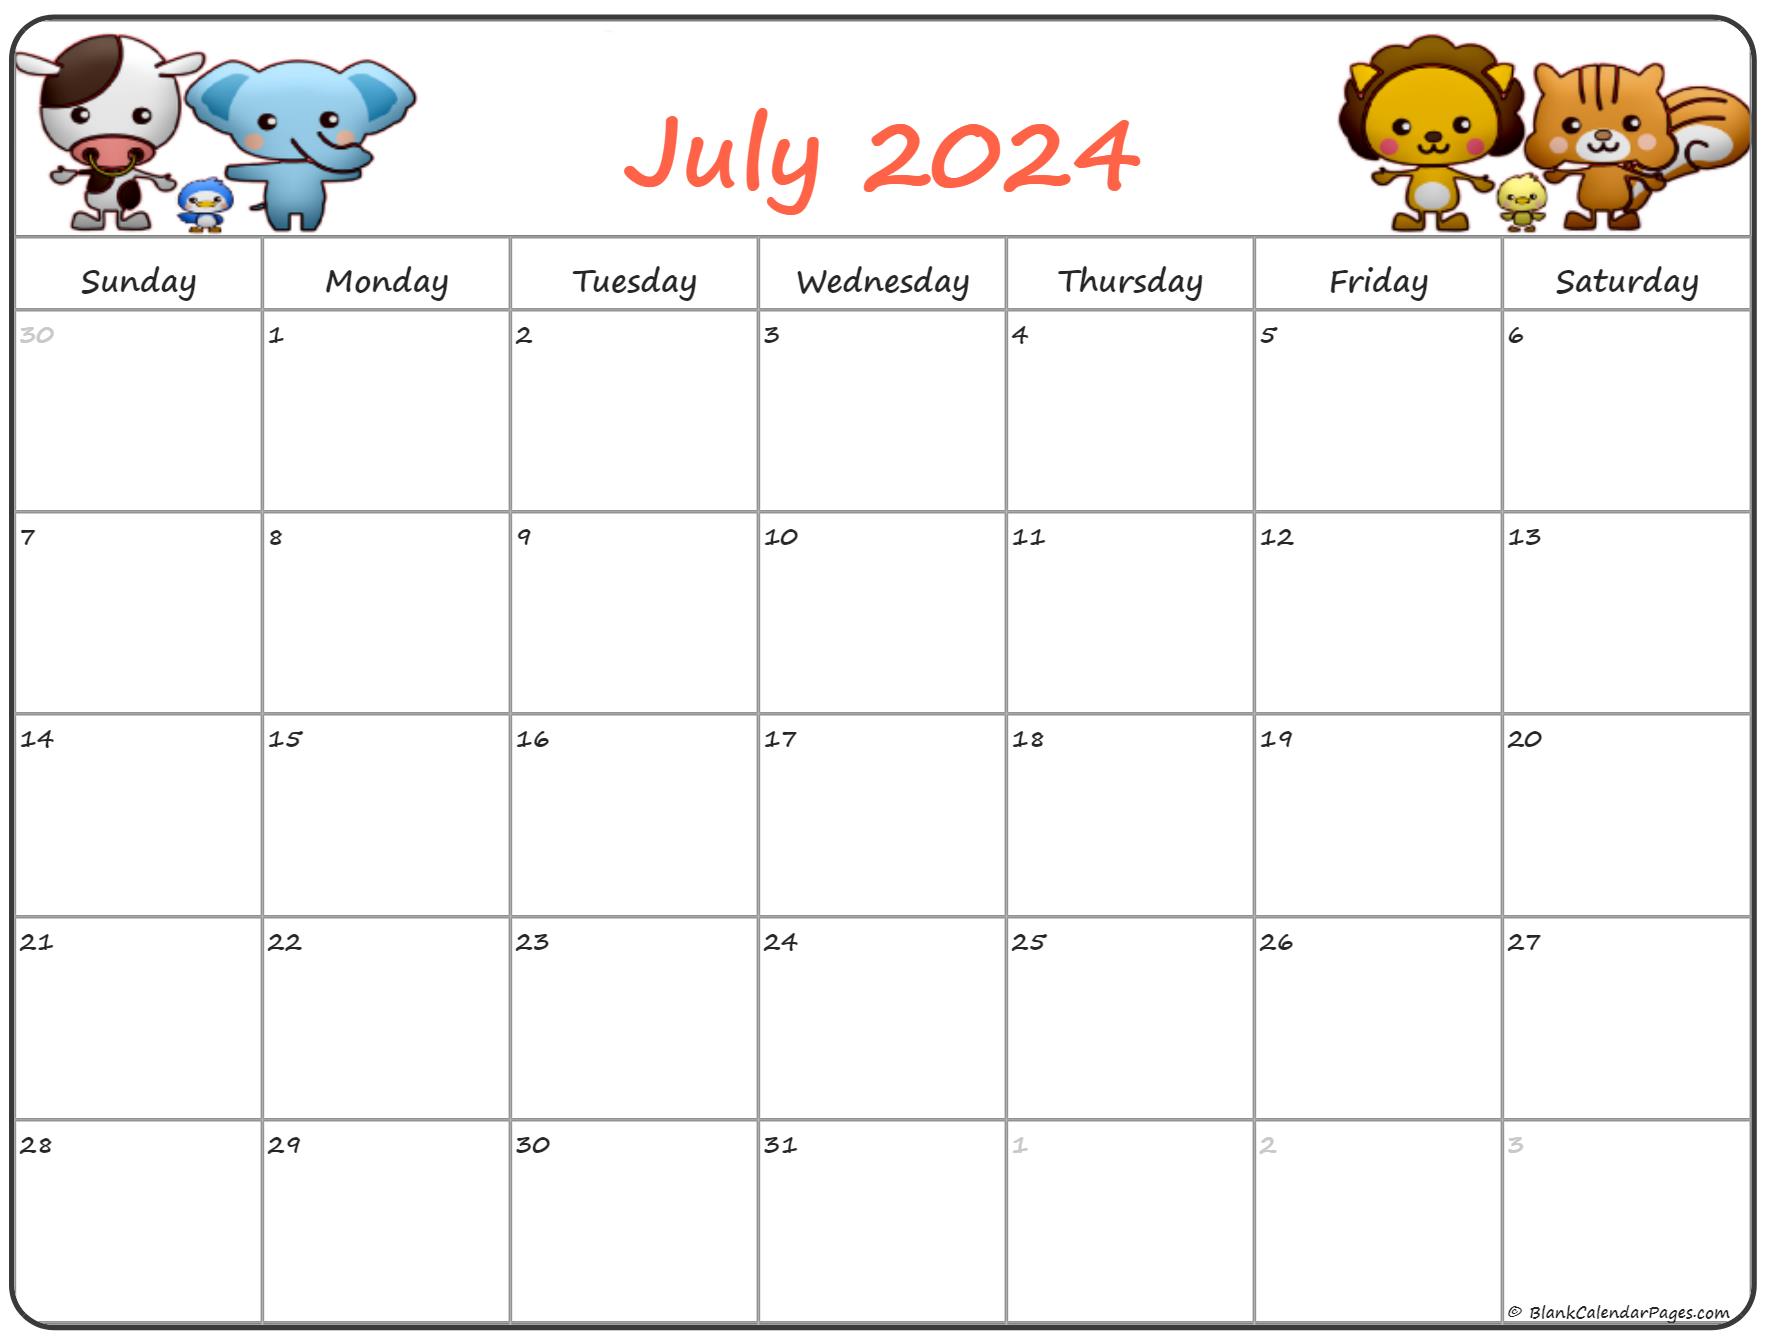 July 2020 Pregnancy Calendar